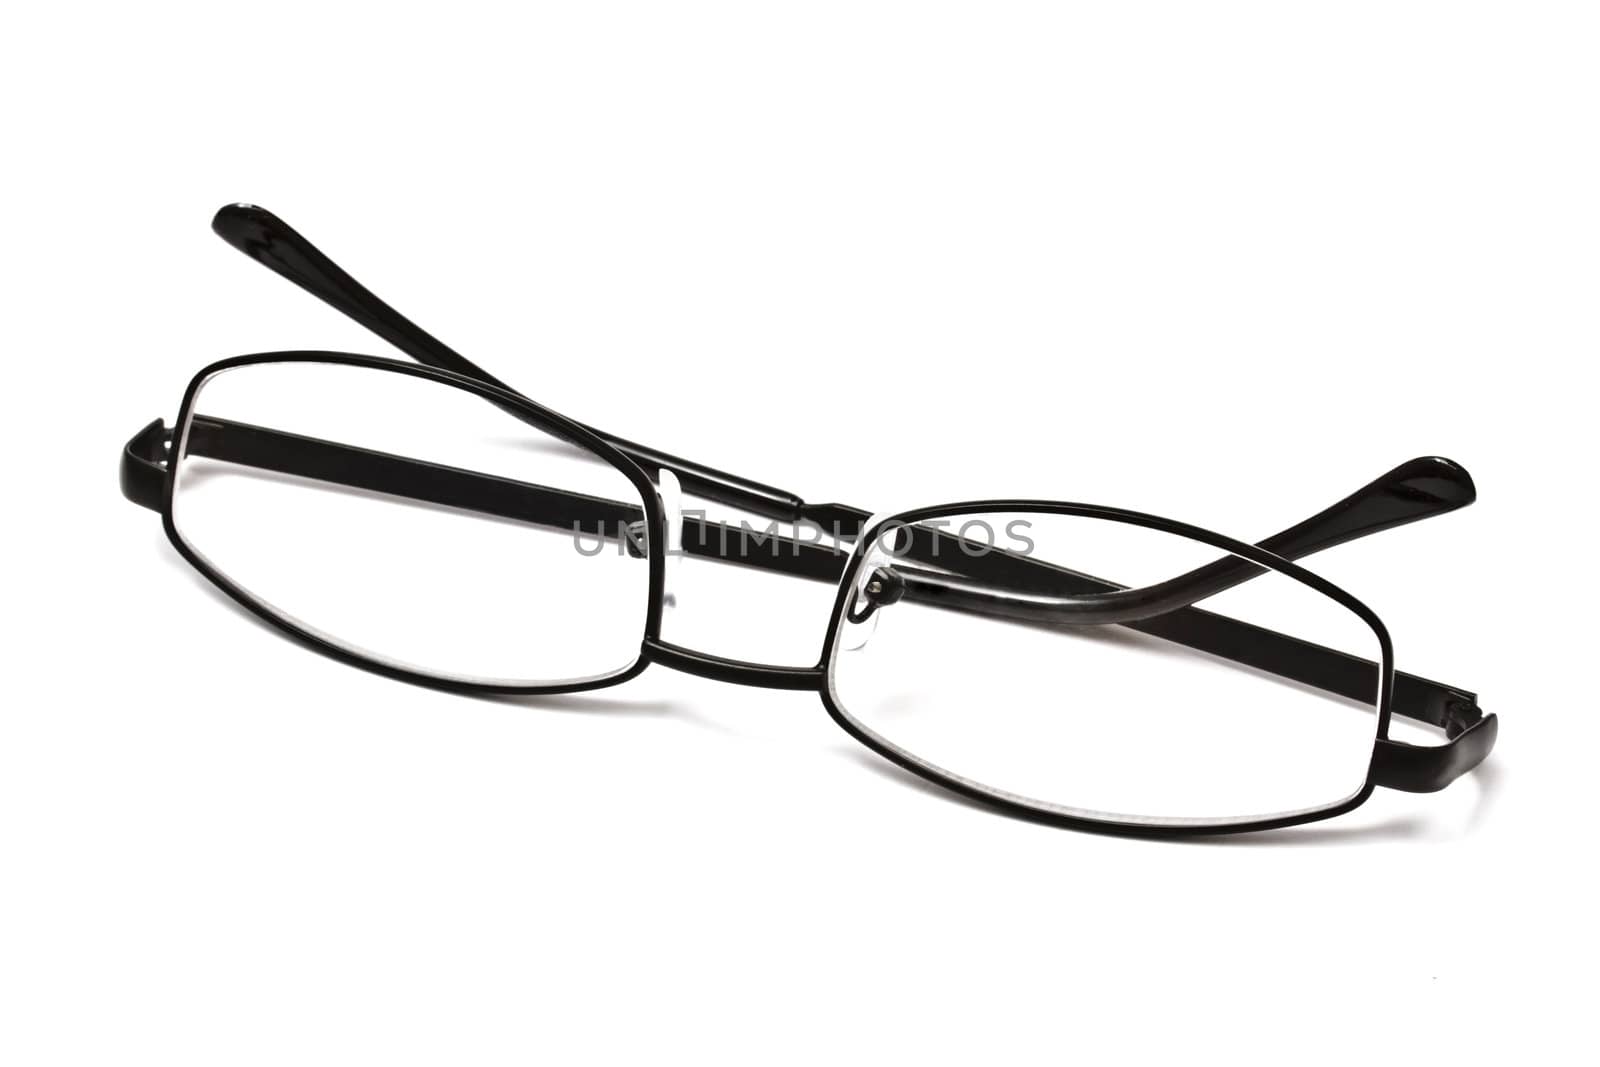 Black reading glasses isolated on white background 
